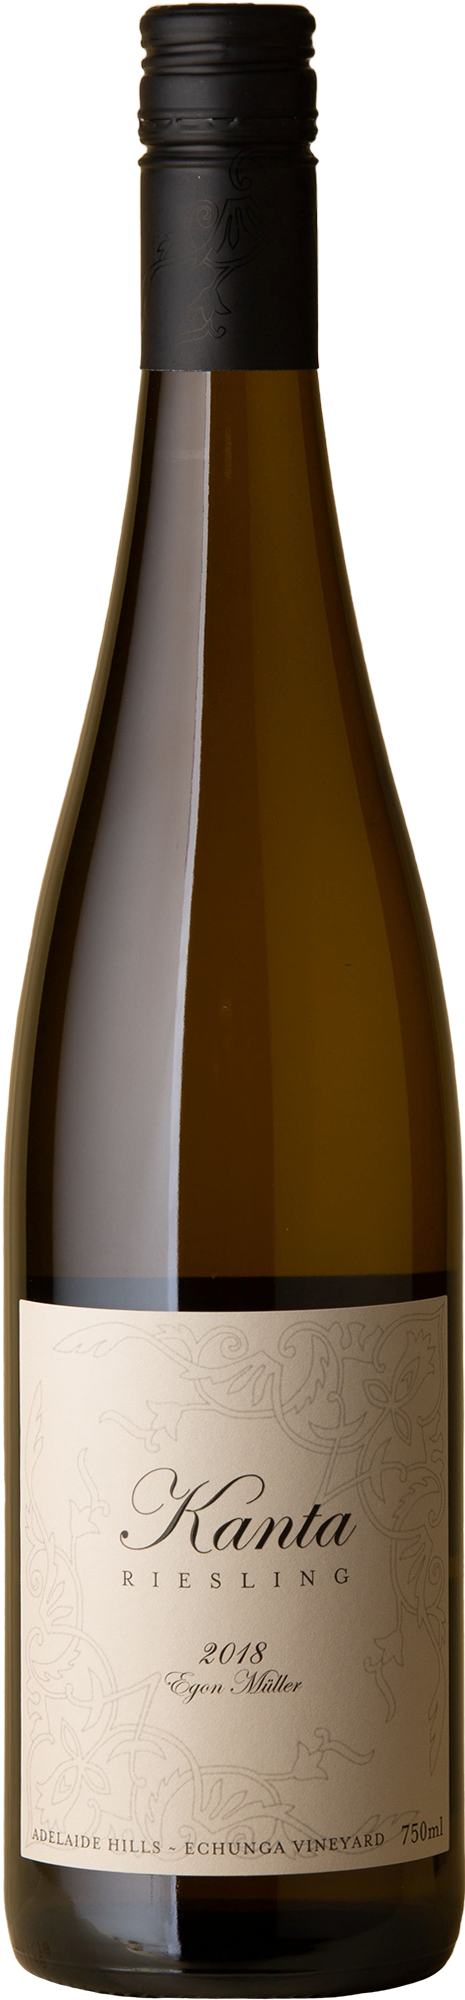 Kanta - Riesling 2018 White Wine